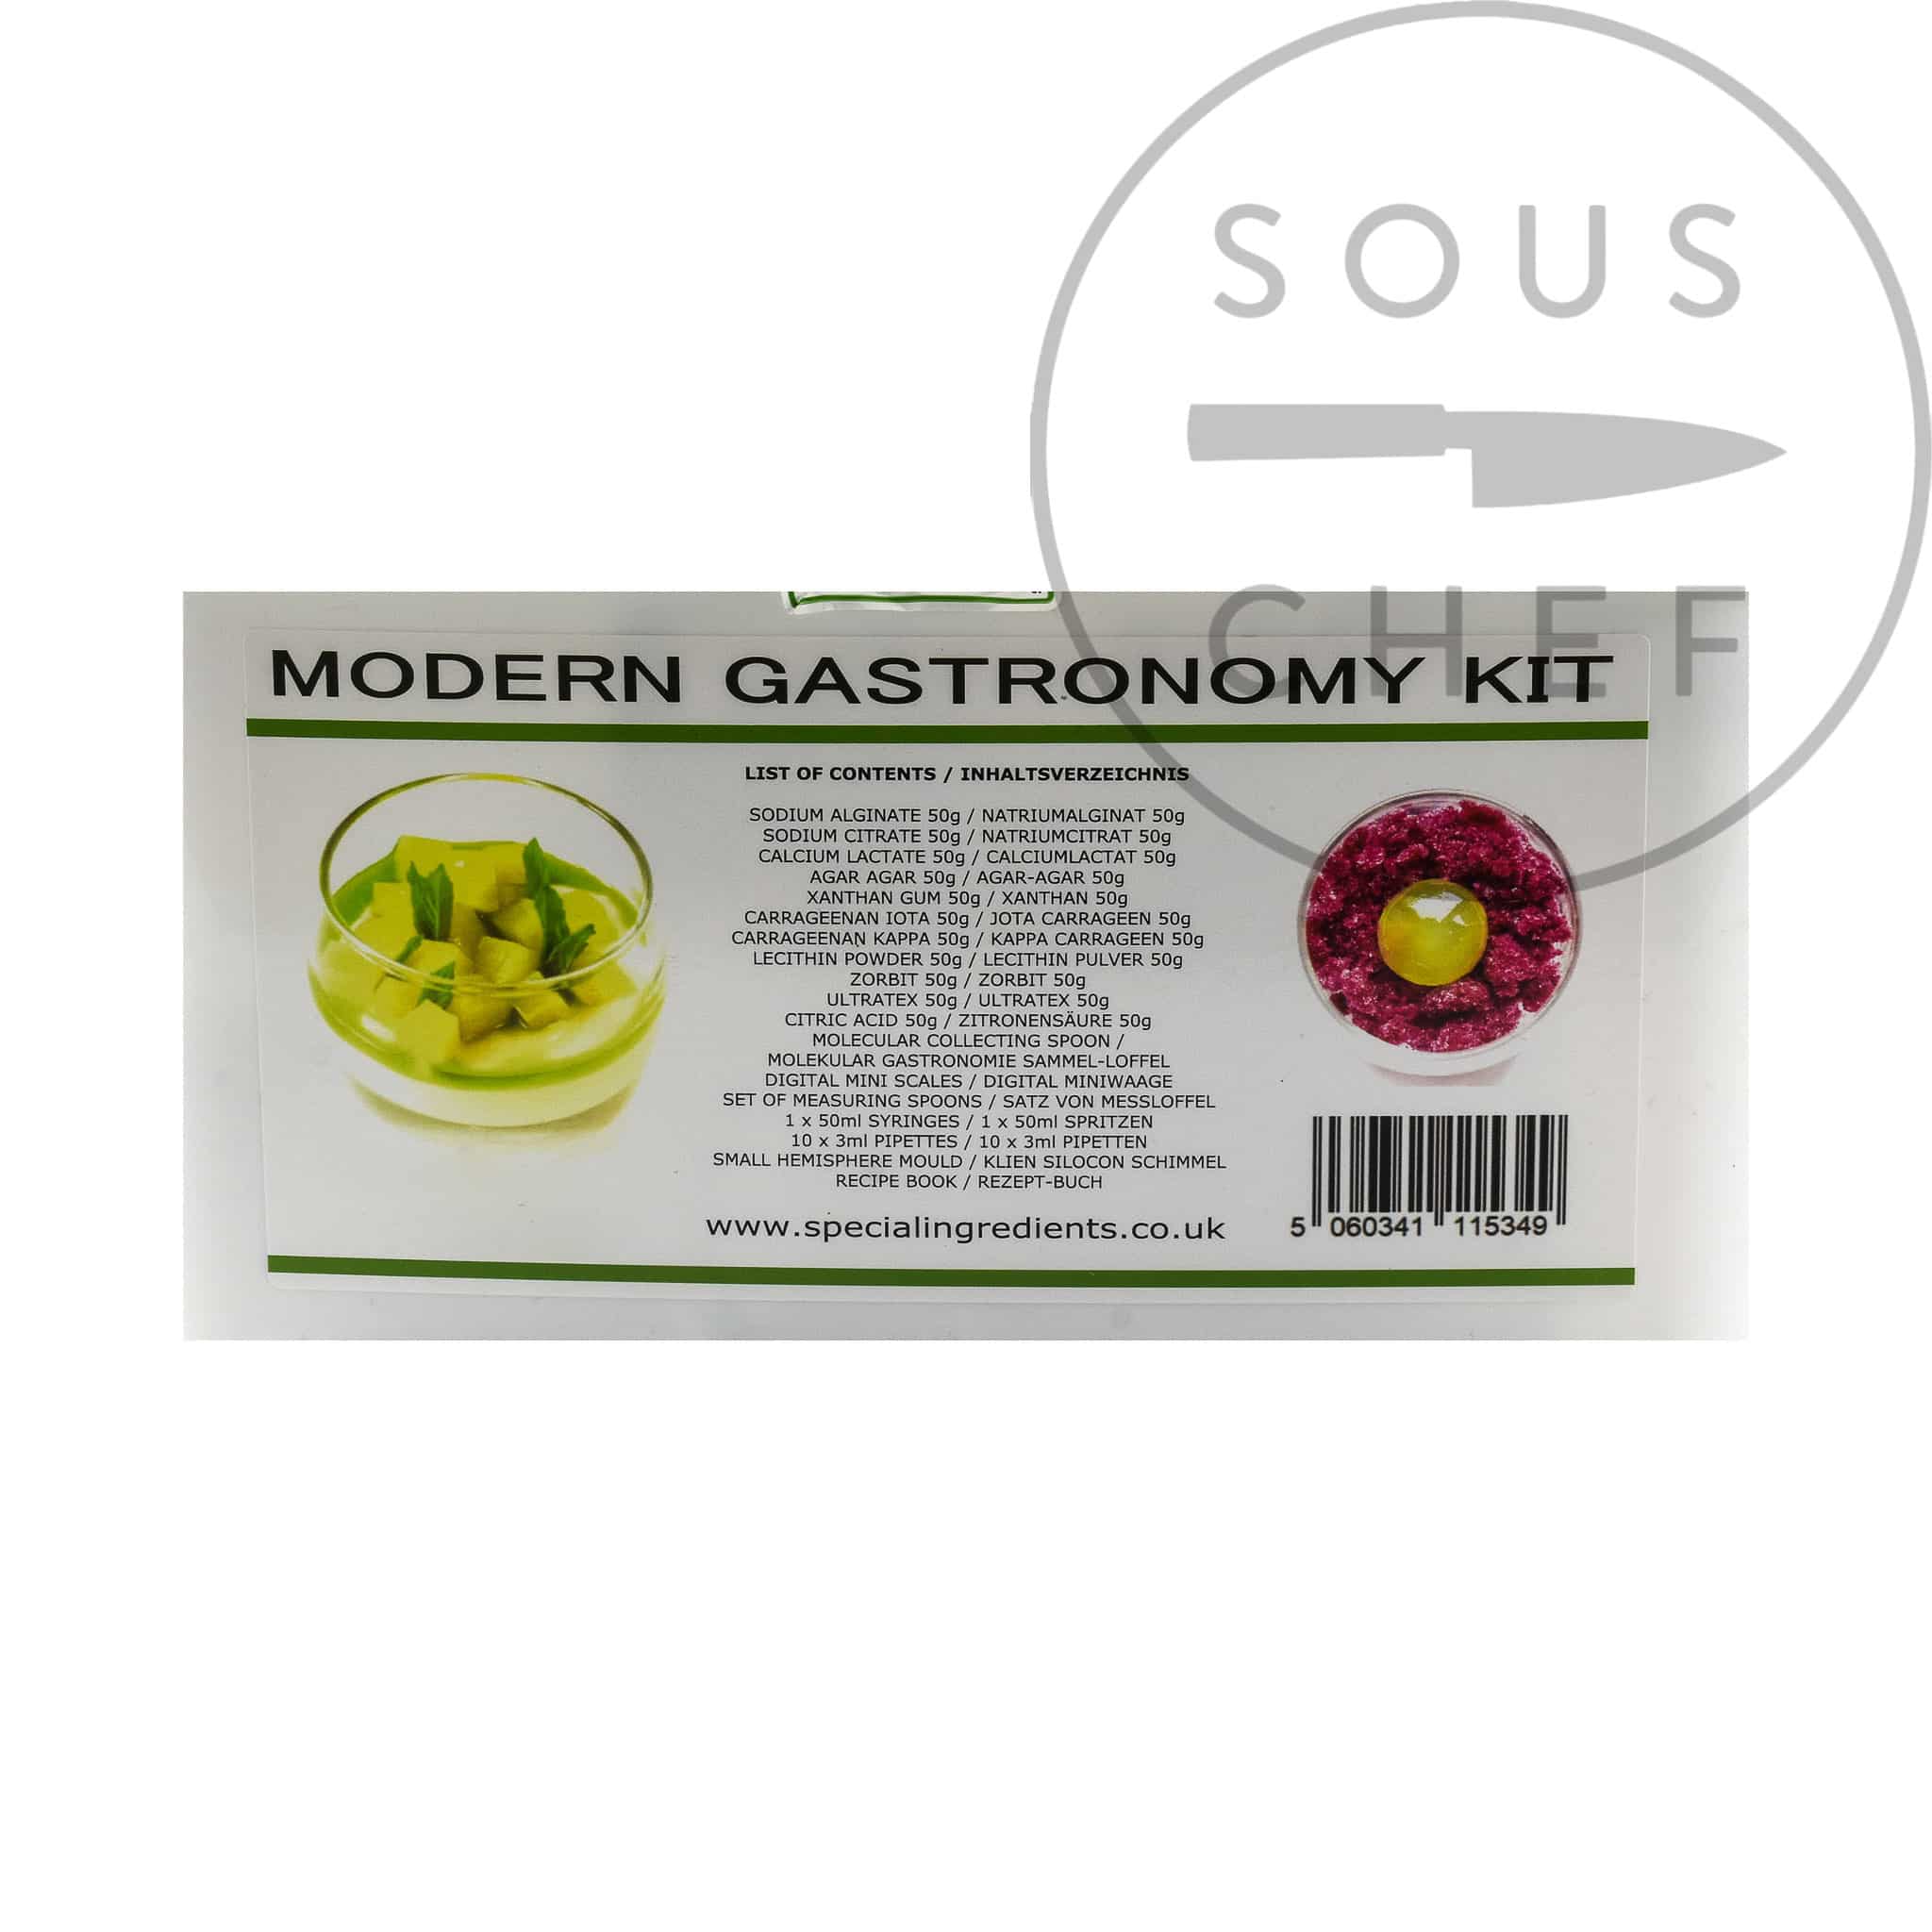 Complete Modern Gastronomy Kit